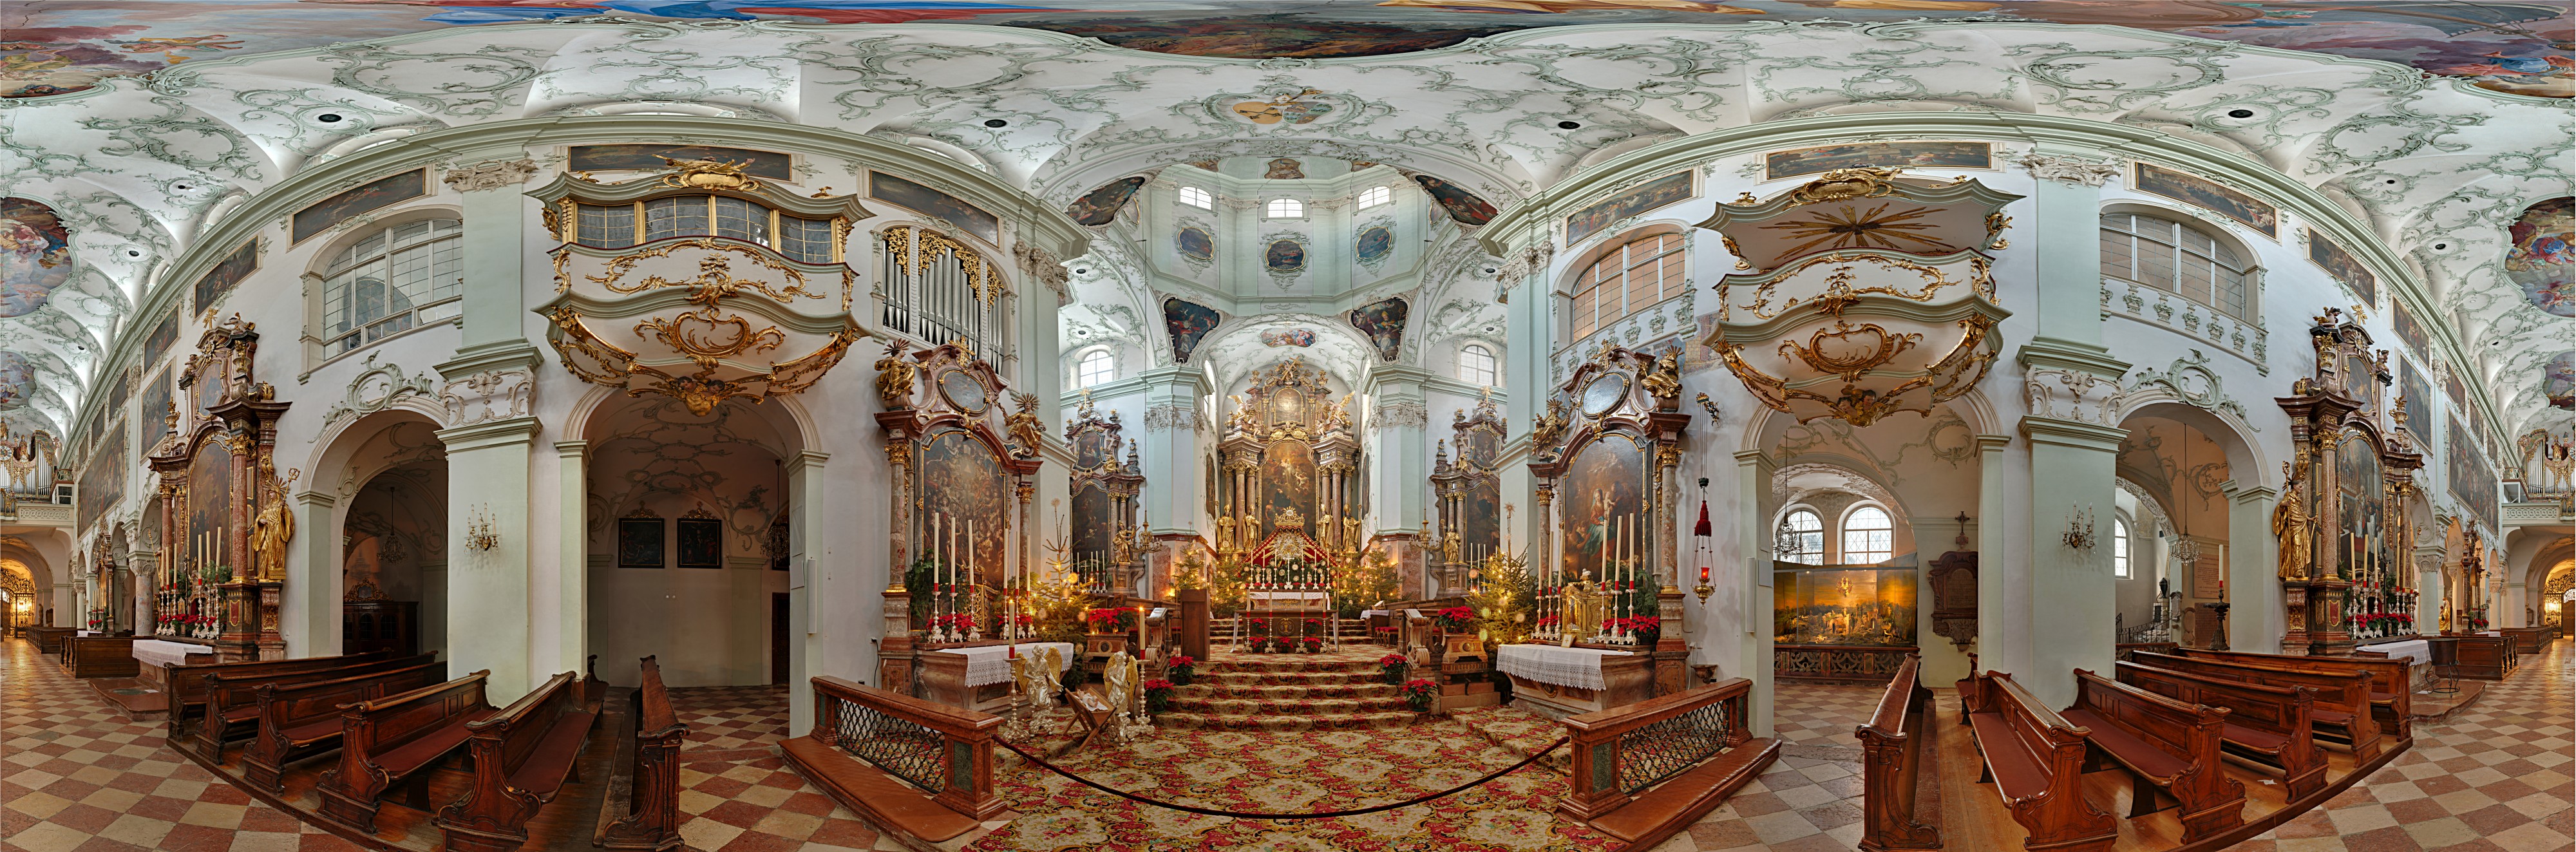 St Peter Salzburg panoramic view of interior small